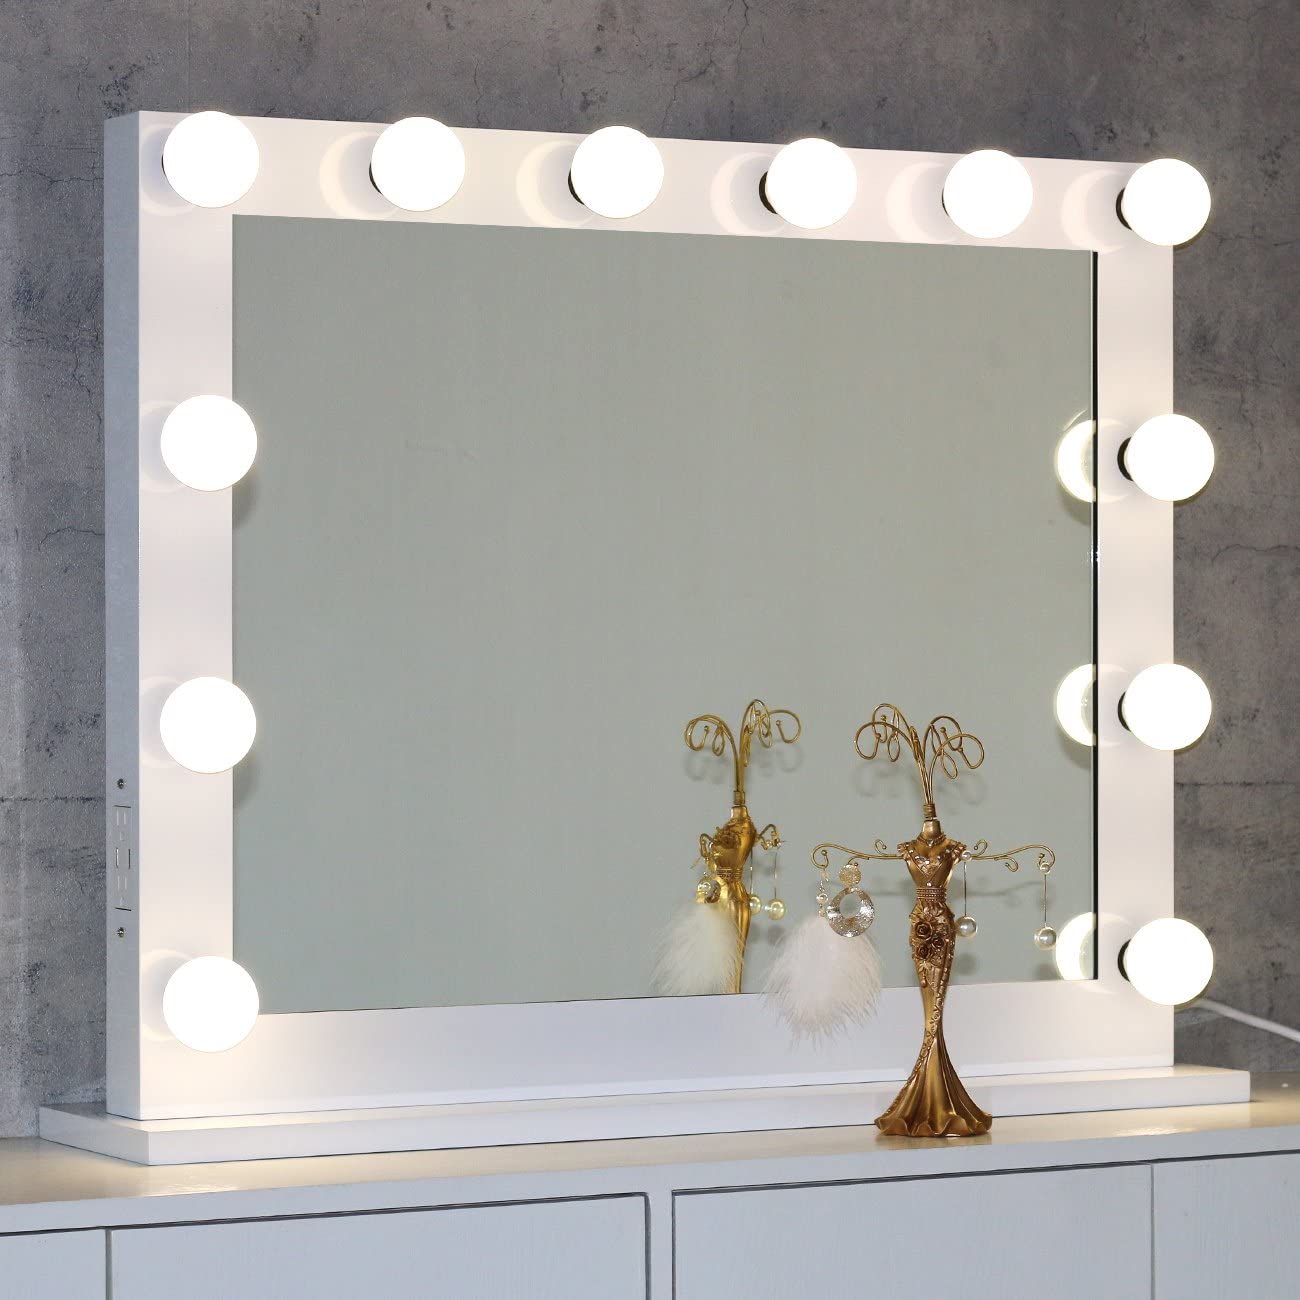 Top 7 Best Light Up Vanity Mirrors, Hollywood Vanity Mirror Small